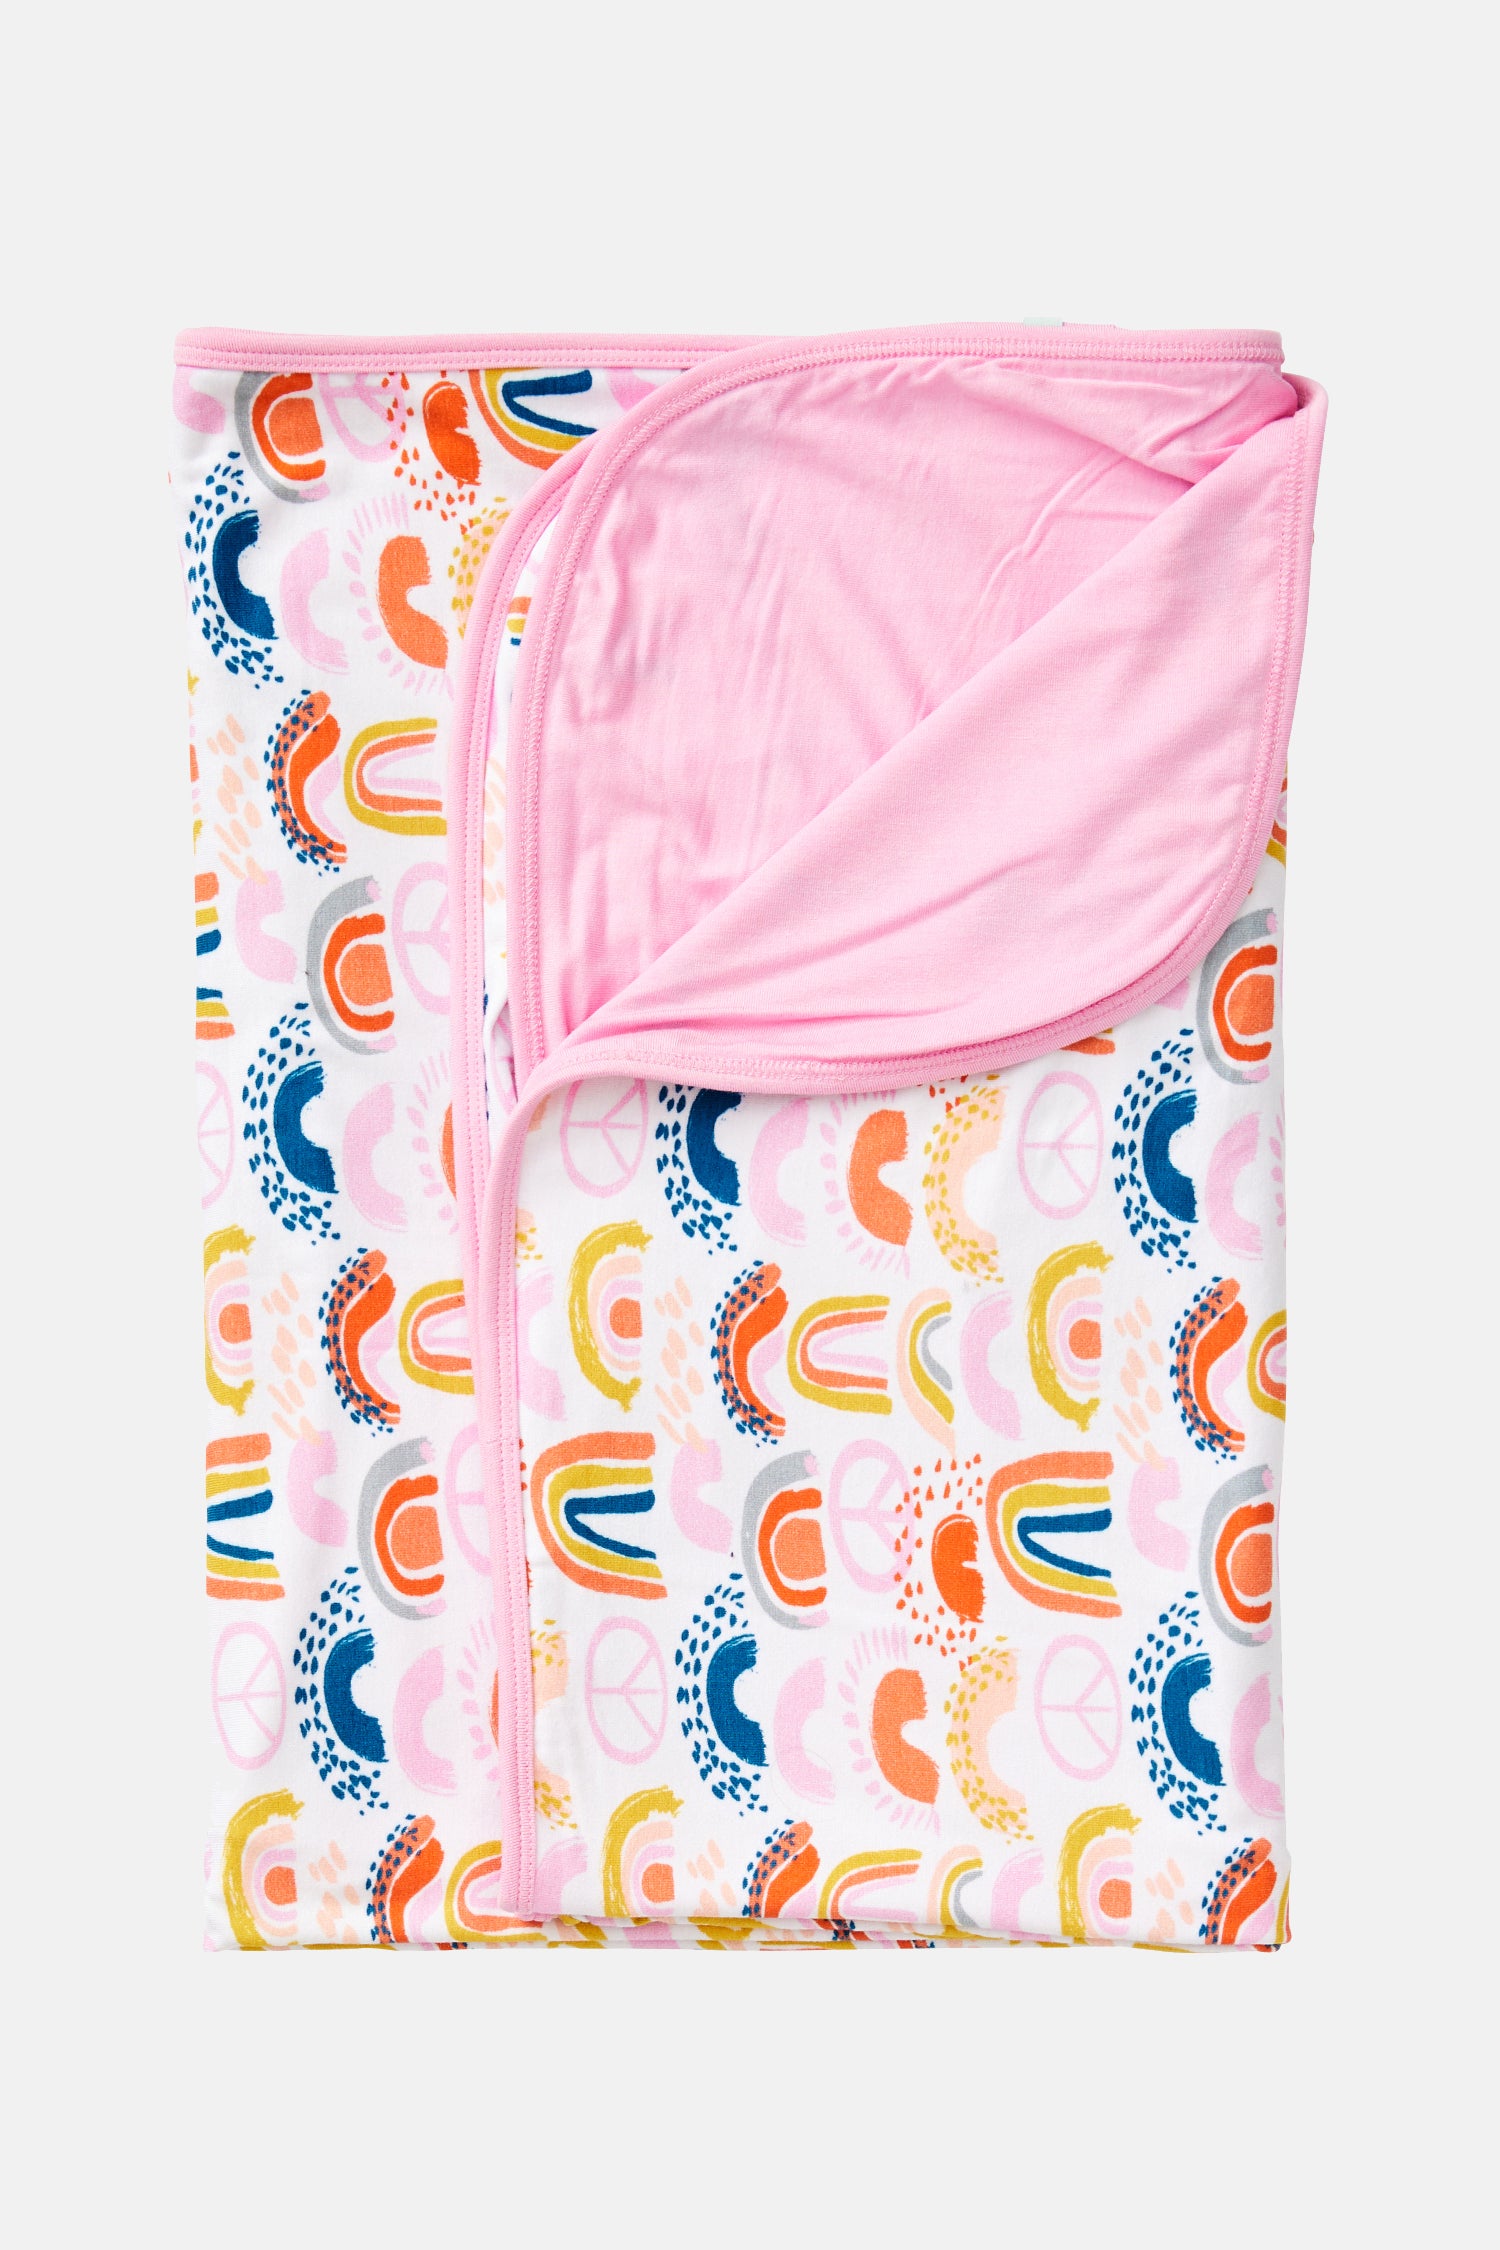 Stretchy Oversized Blanket - Rainbows Pink